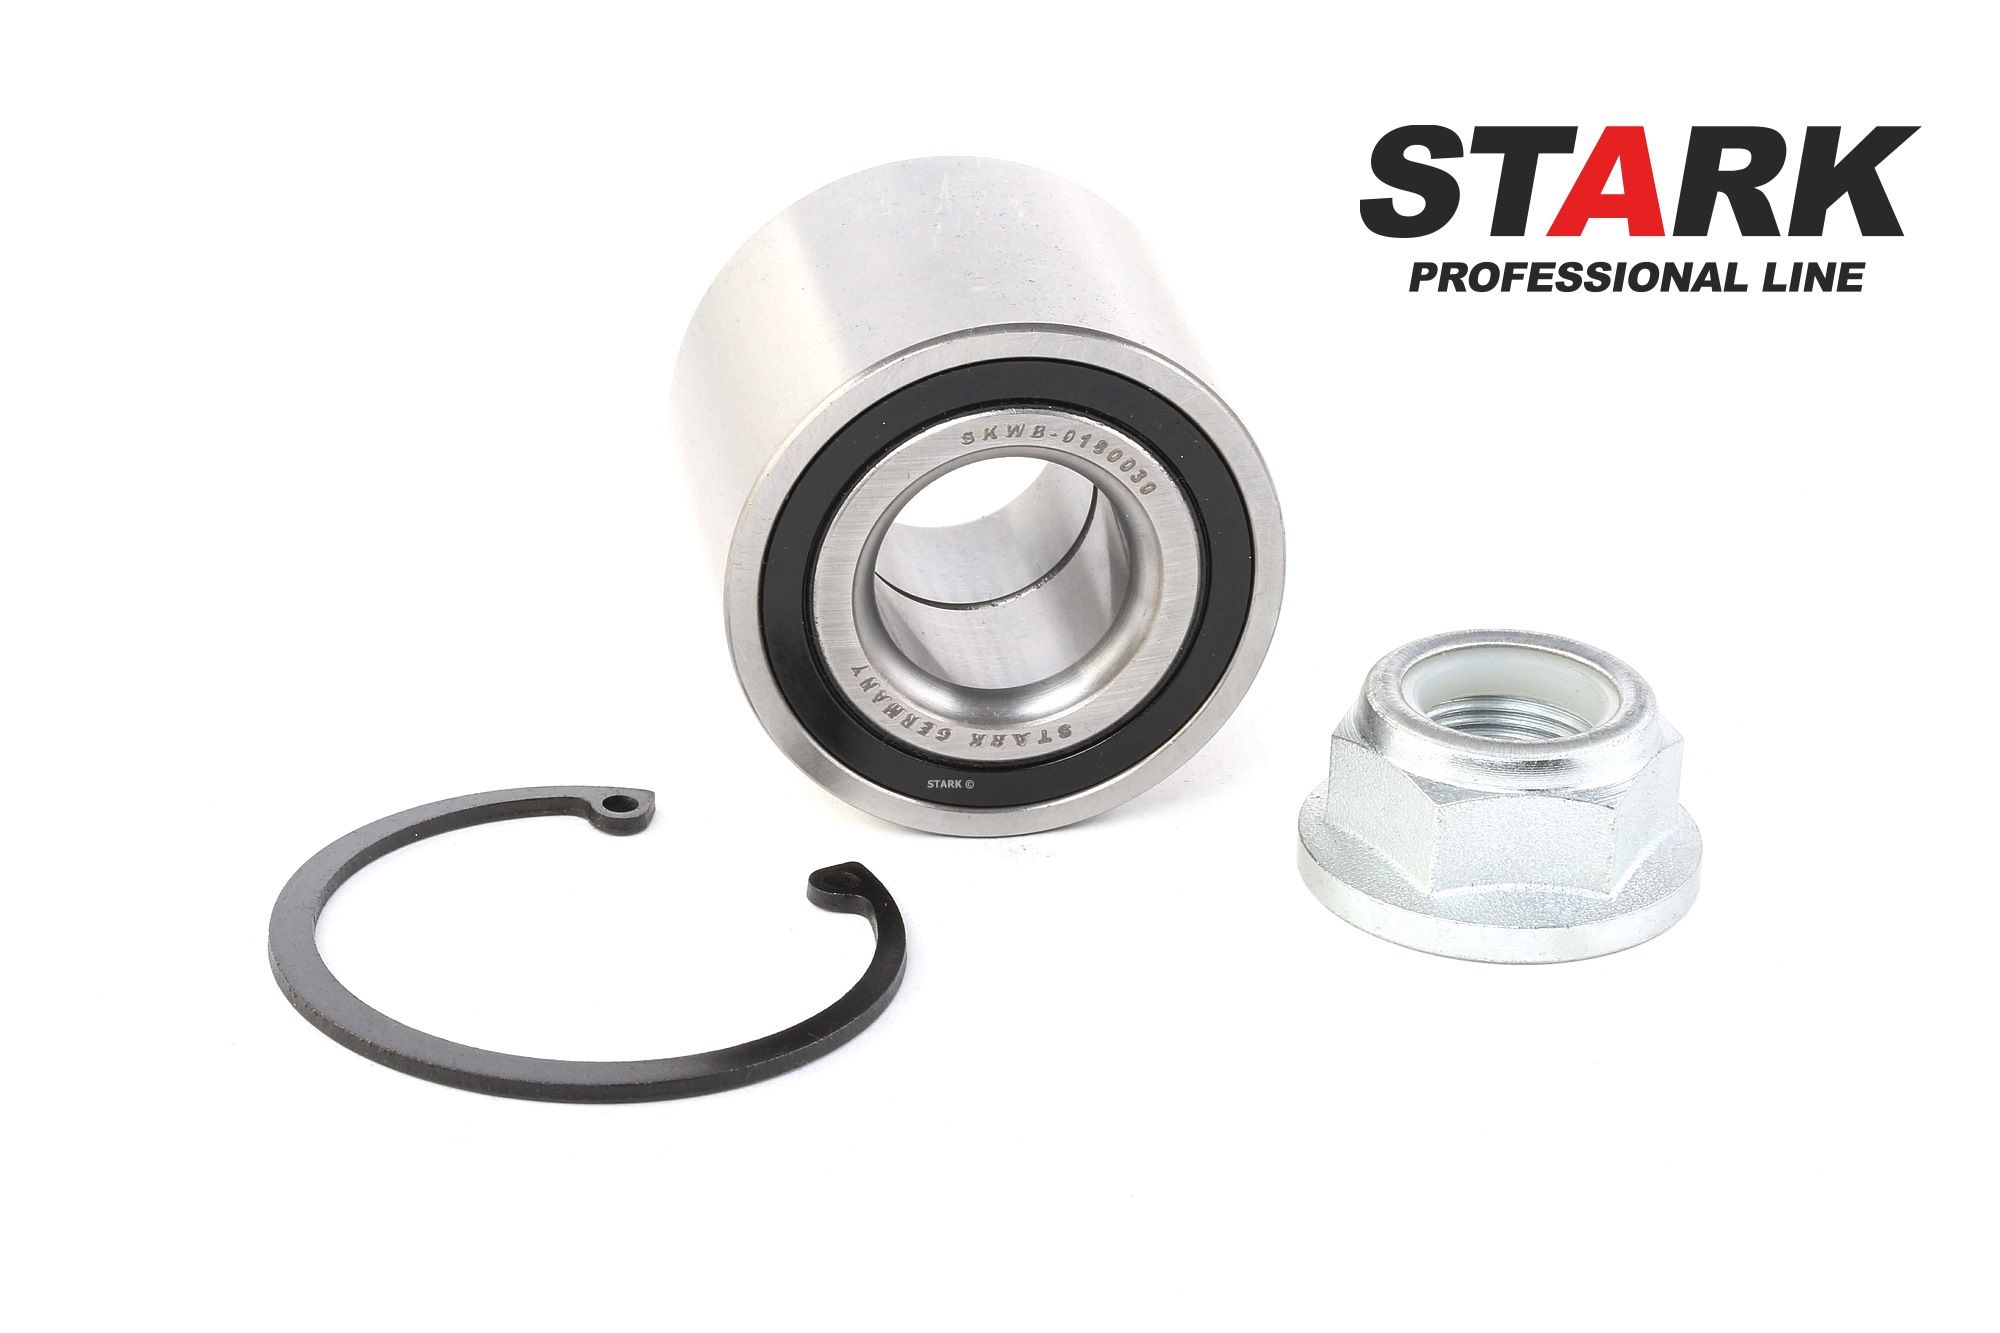 STARK SKWB-0180030 Wheel bearing kit Rear Axle both sides, 55 mm